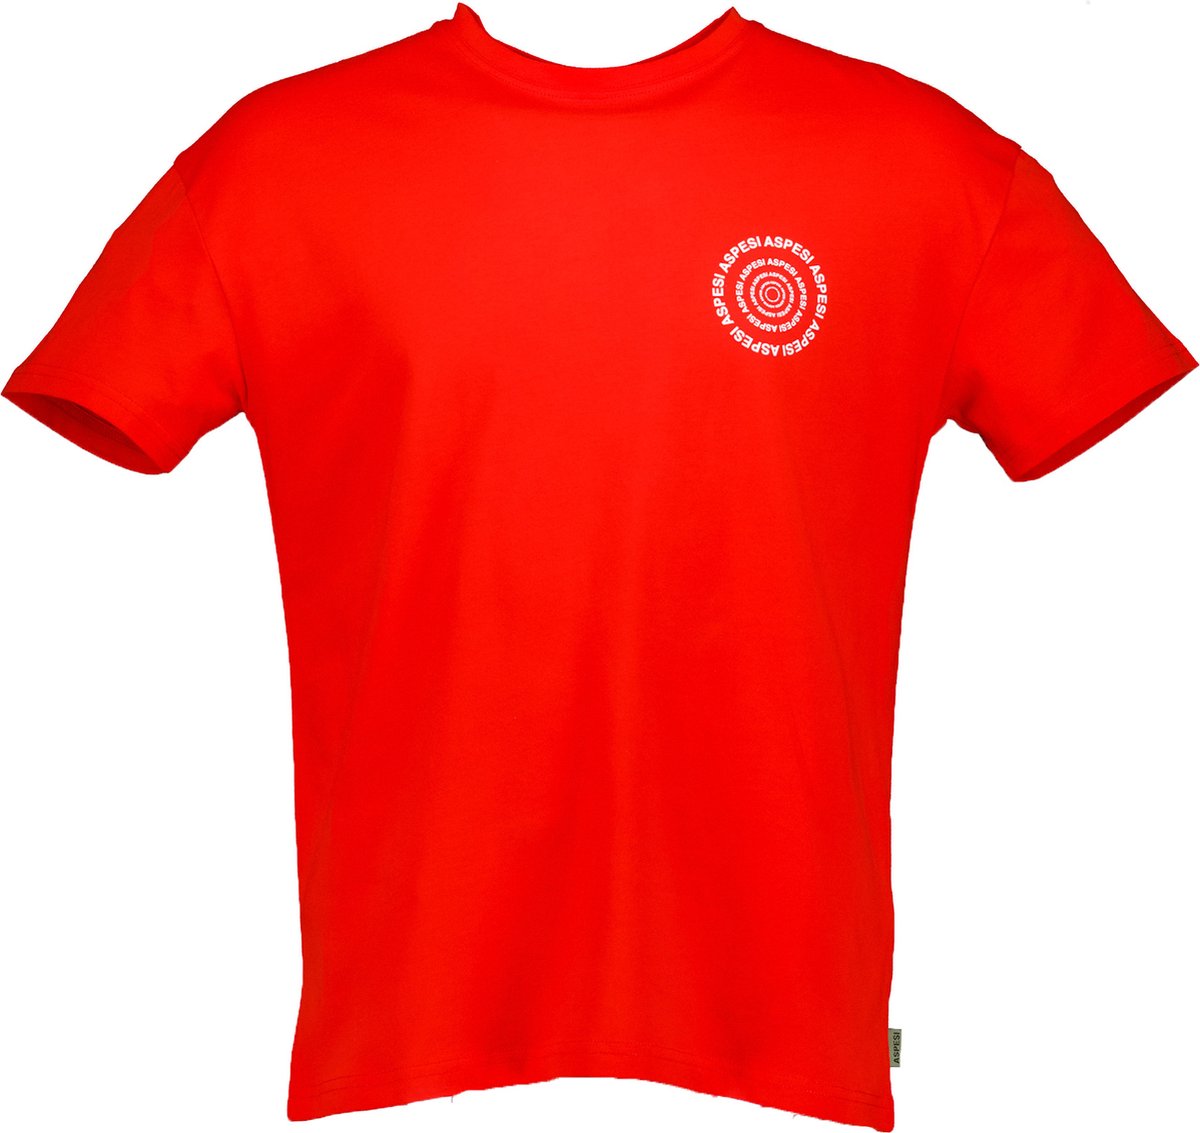 Aspesi Shirt Rood Katoen maat XL Basic t-shirts rood